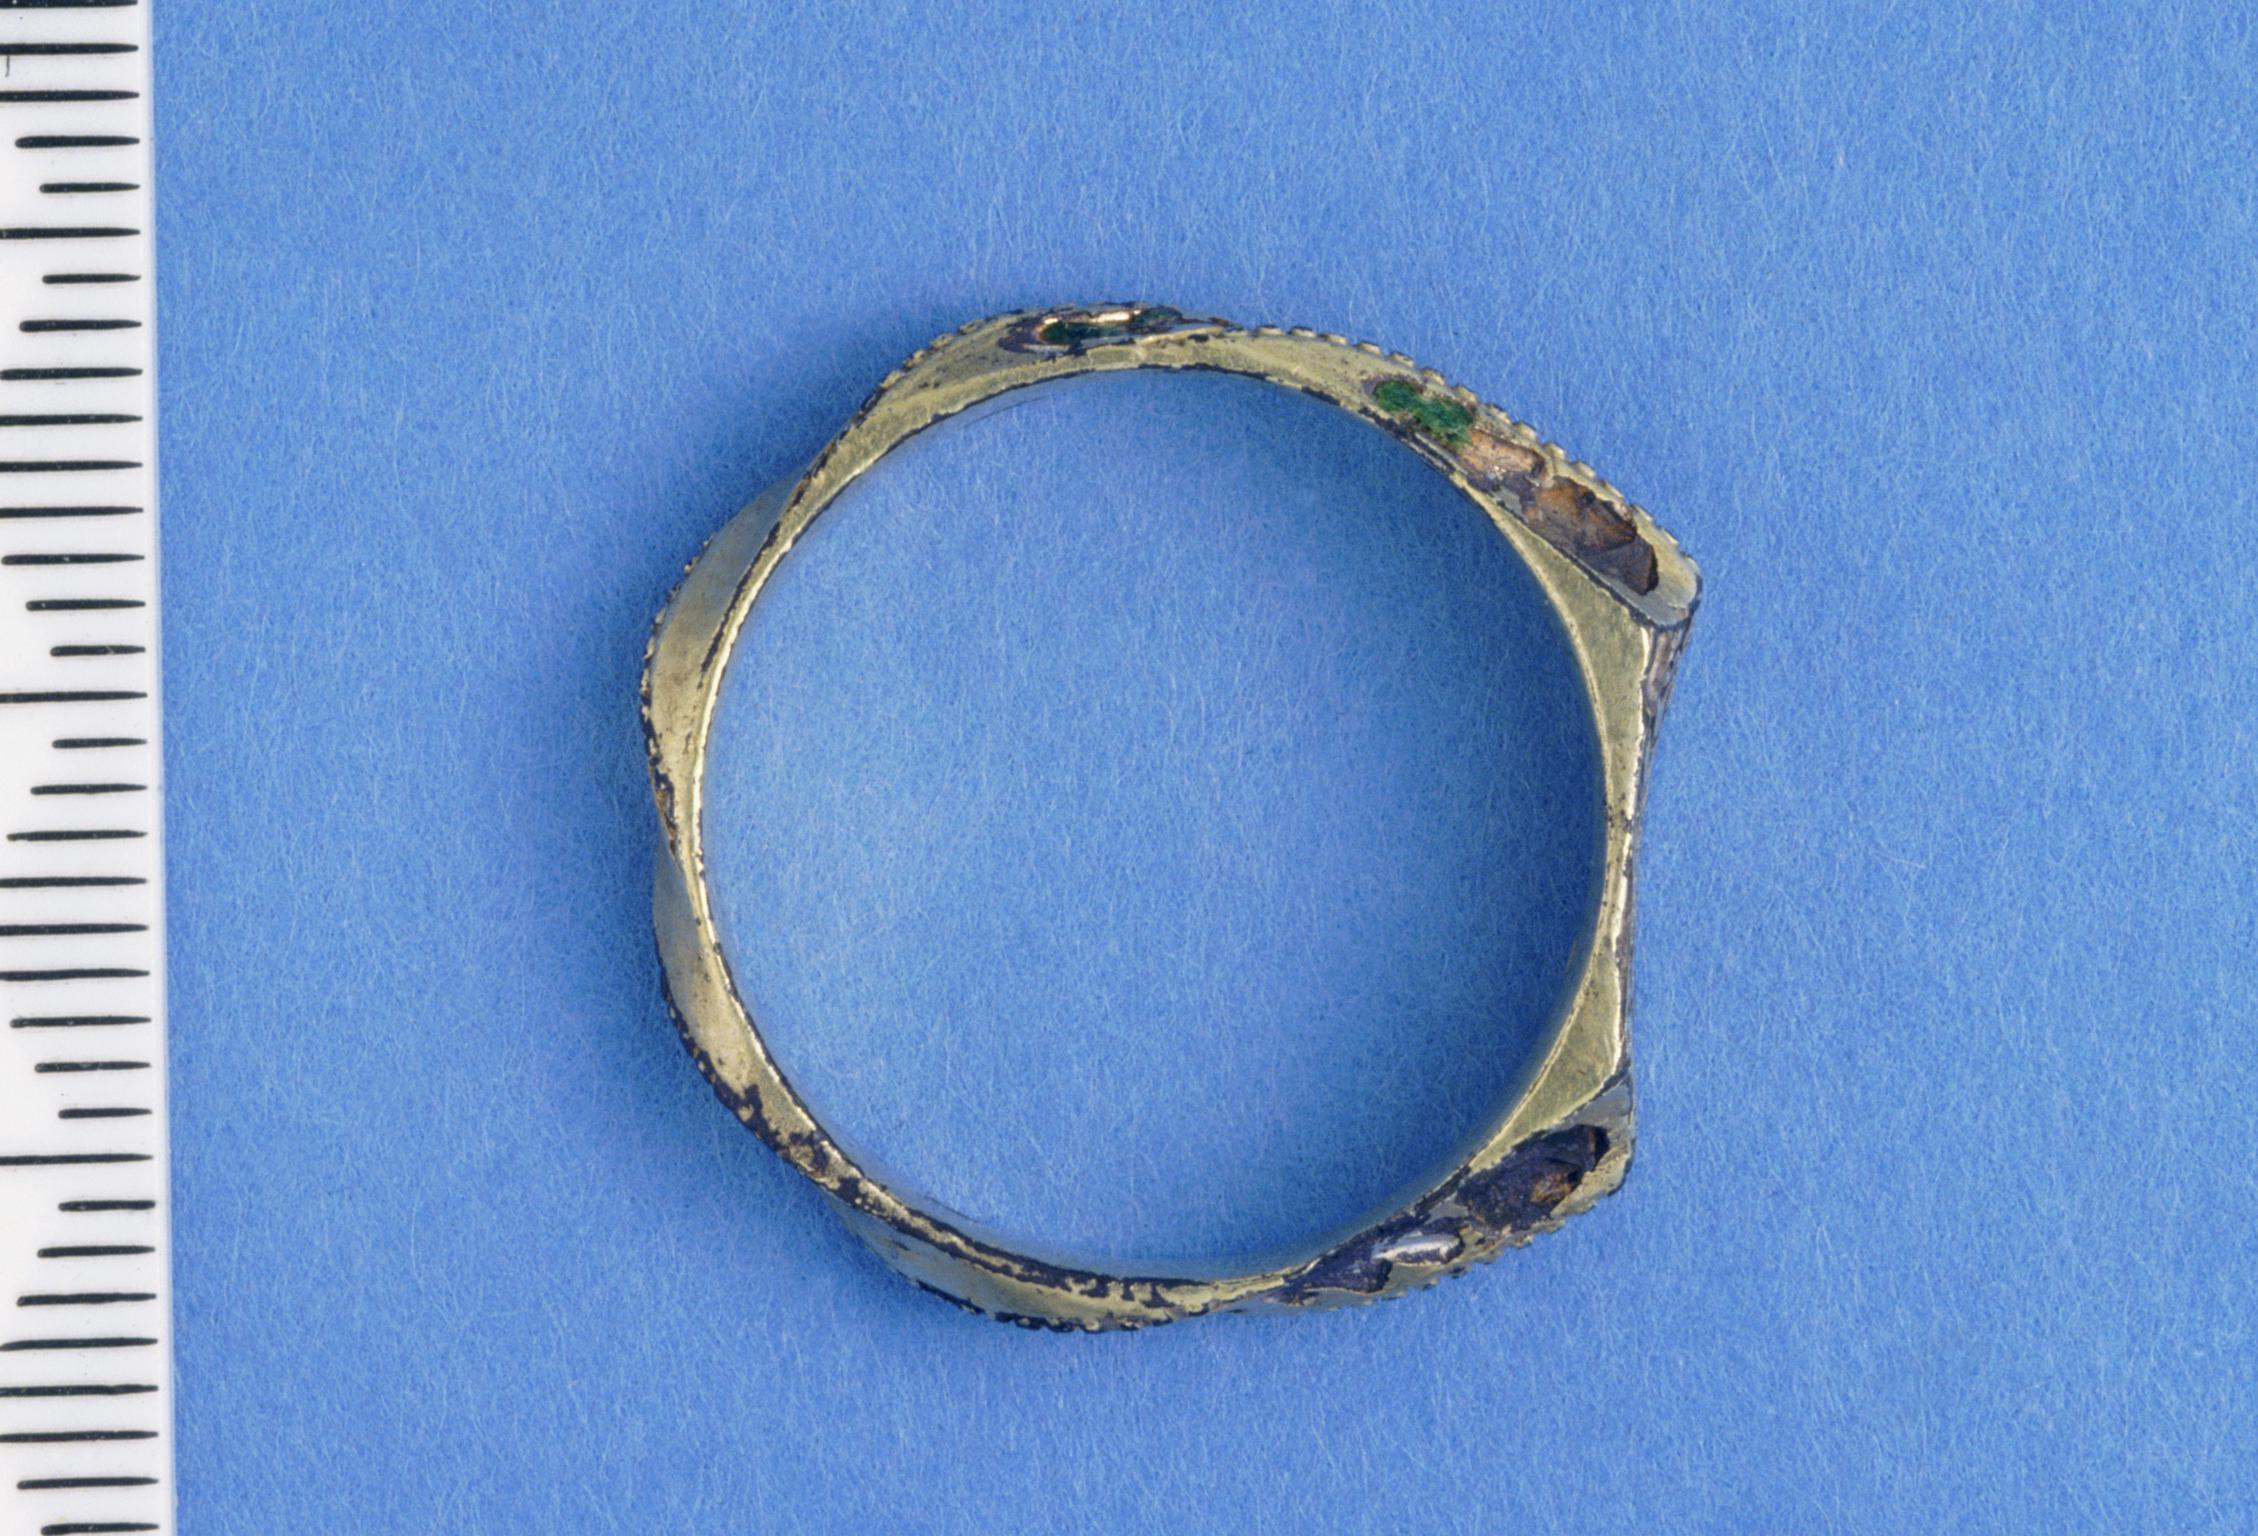 Medieval silver finger ring